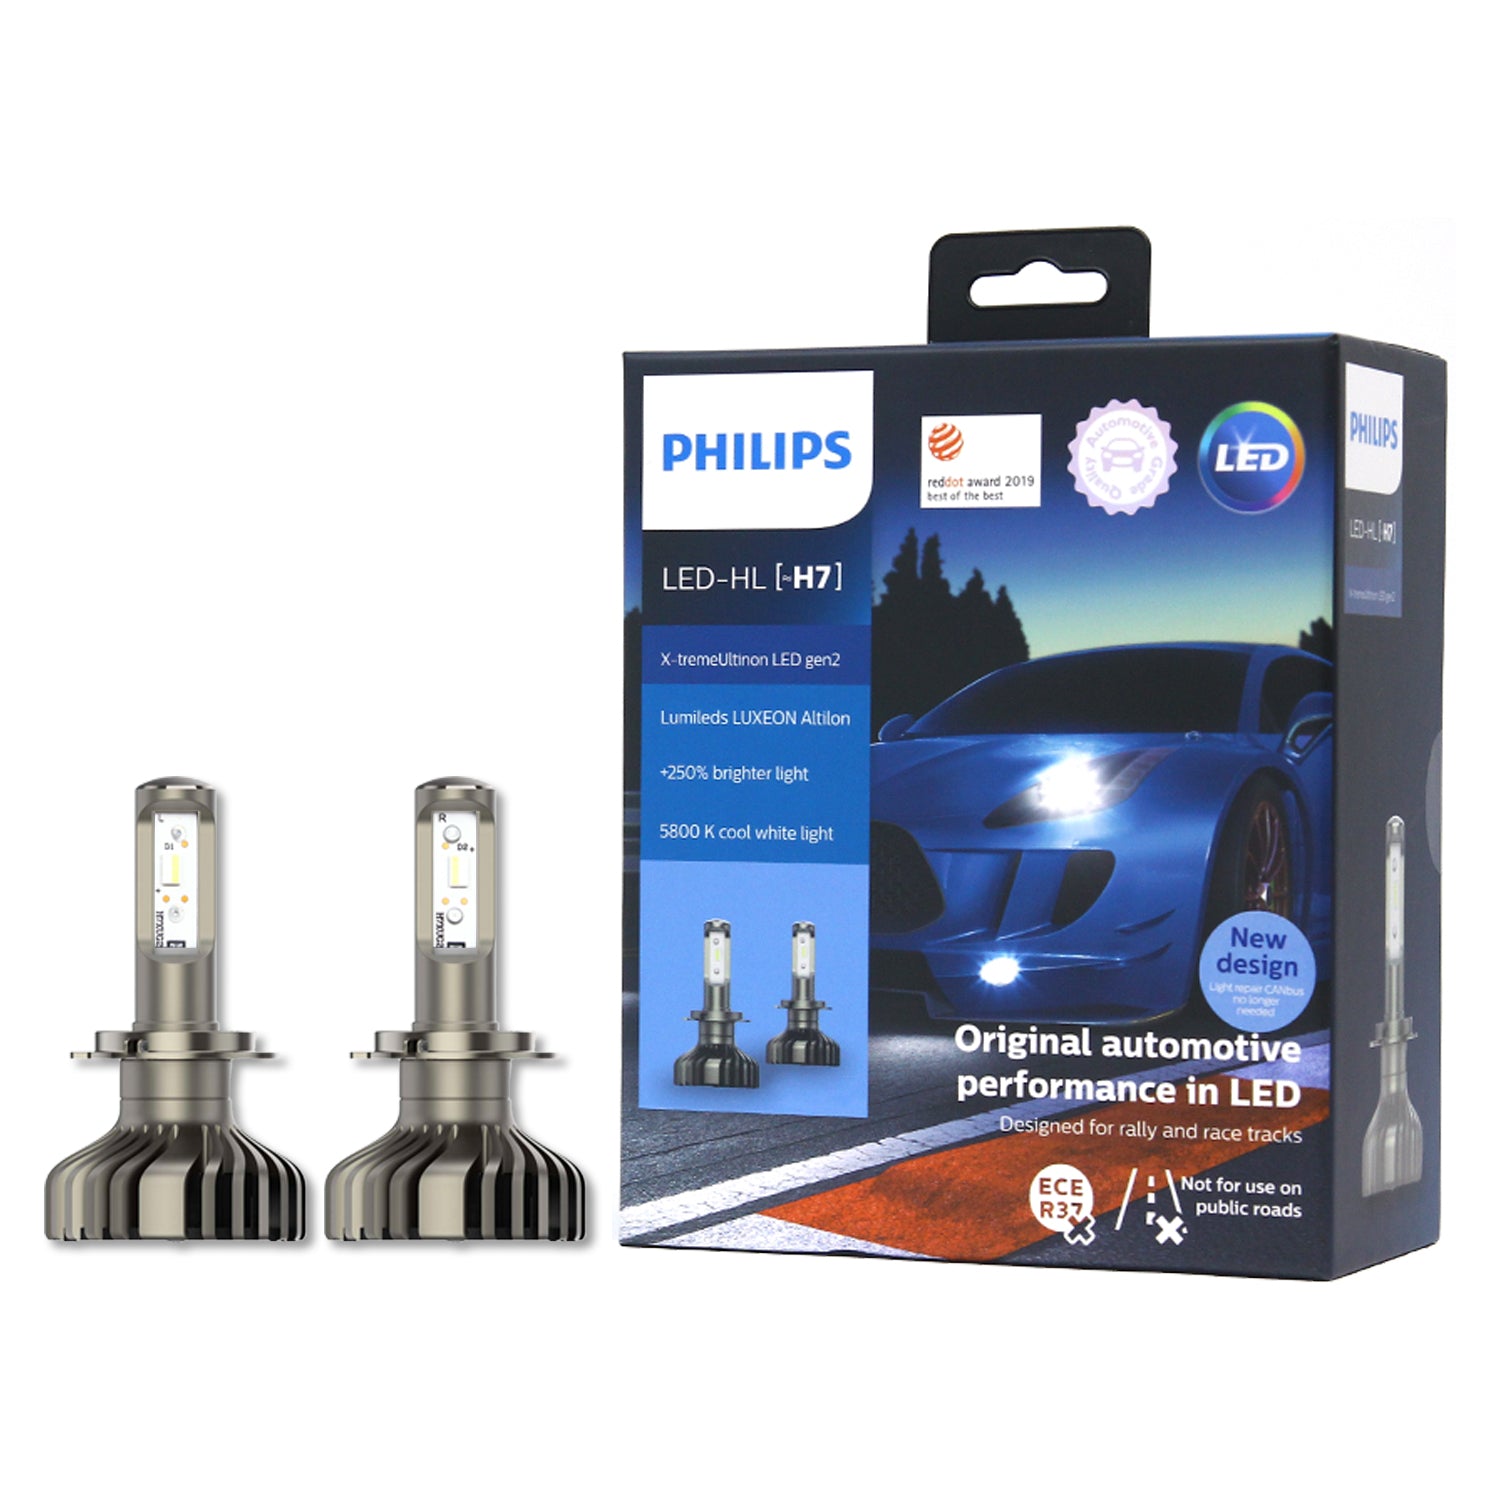 Philips LED Ultinon Pro1000 HL (H1) - Set of two bulbs - Autolume Plus